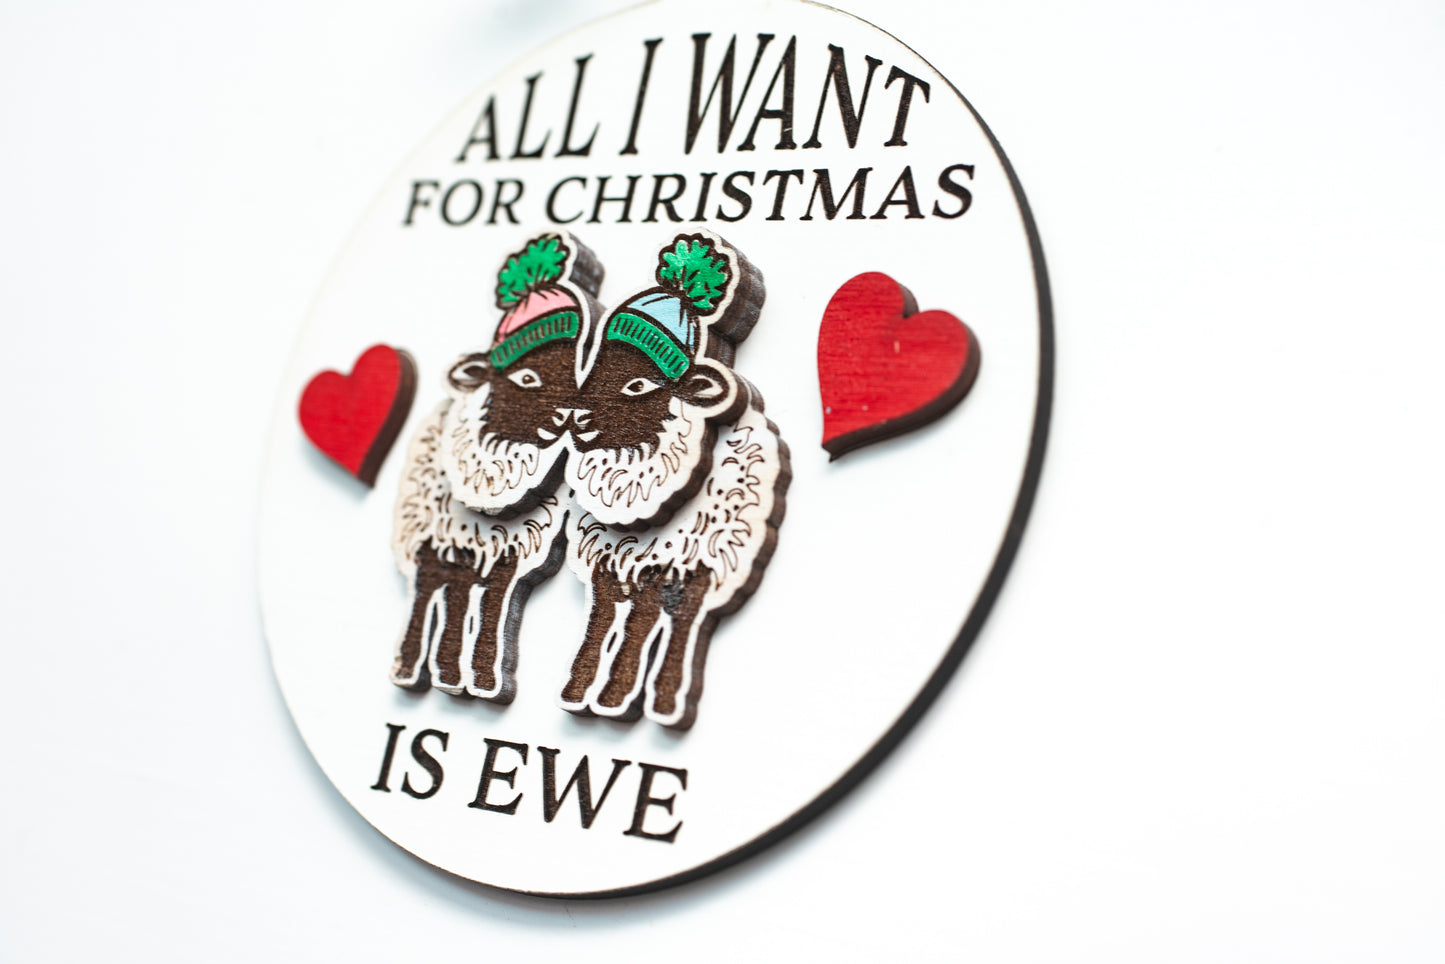 All I Want For Christmas is Ewe Christmas Ornament